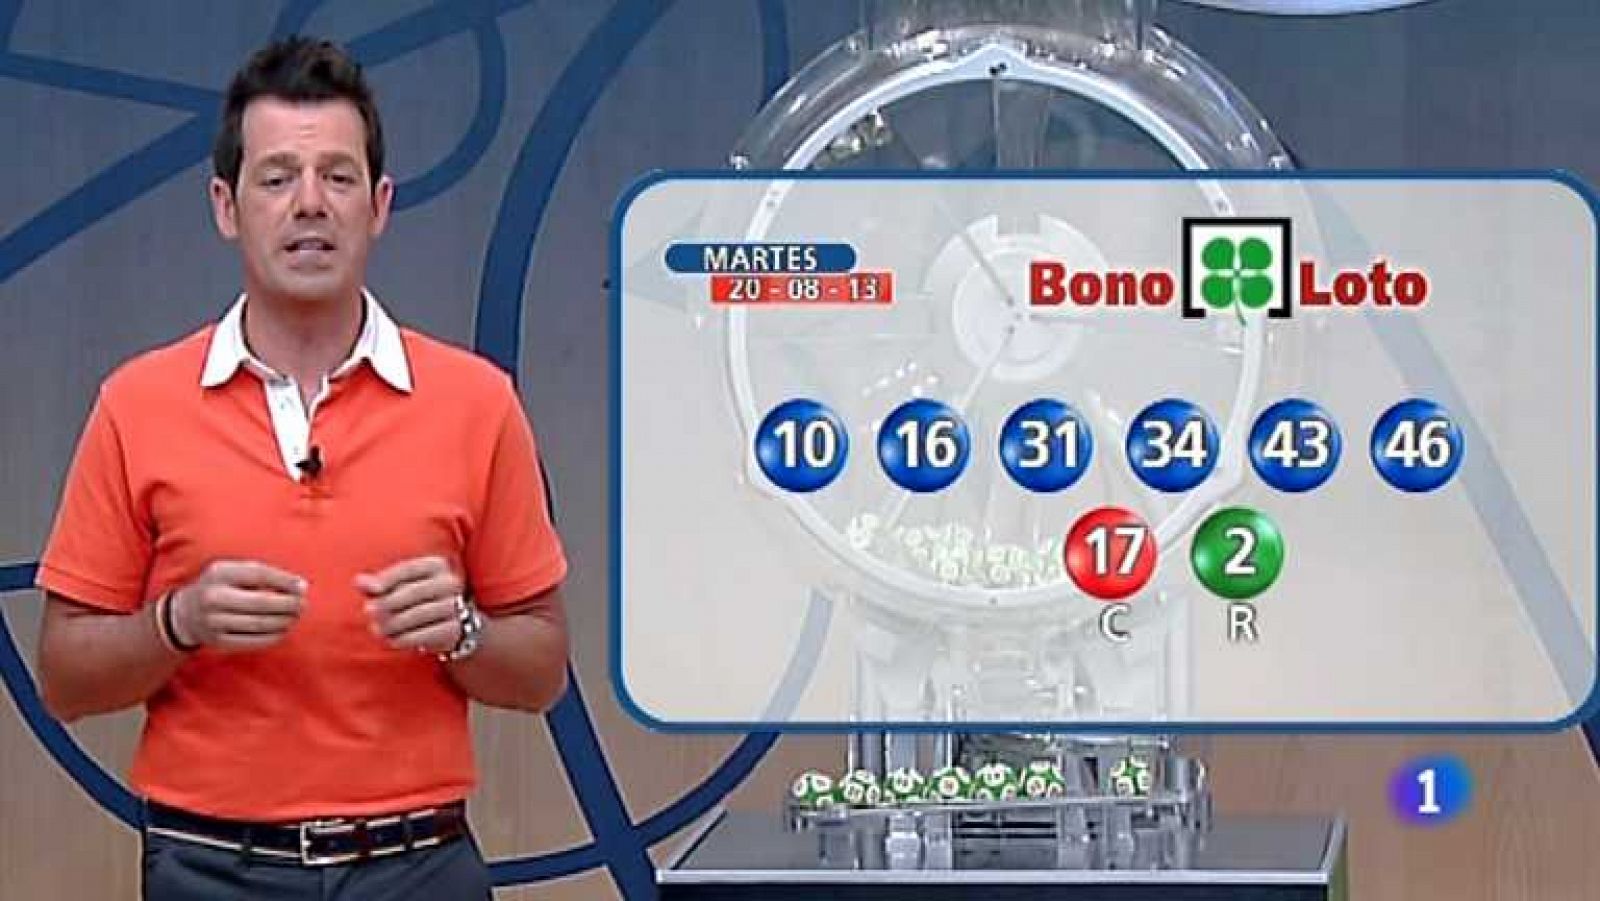 Loterías: Bonoloto + Euromillones - 20/08/13 | RTVE Play